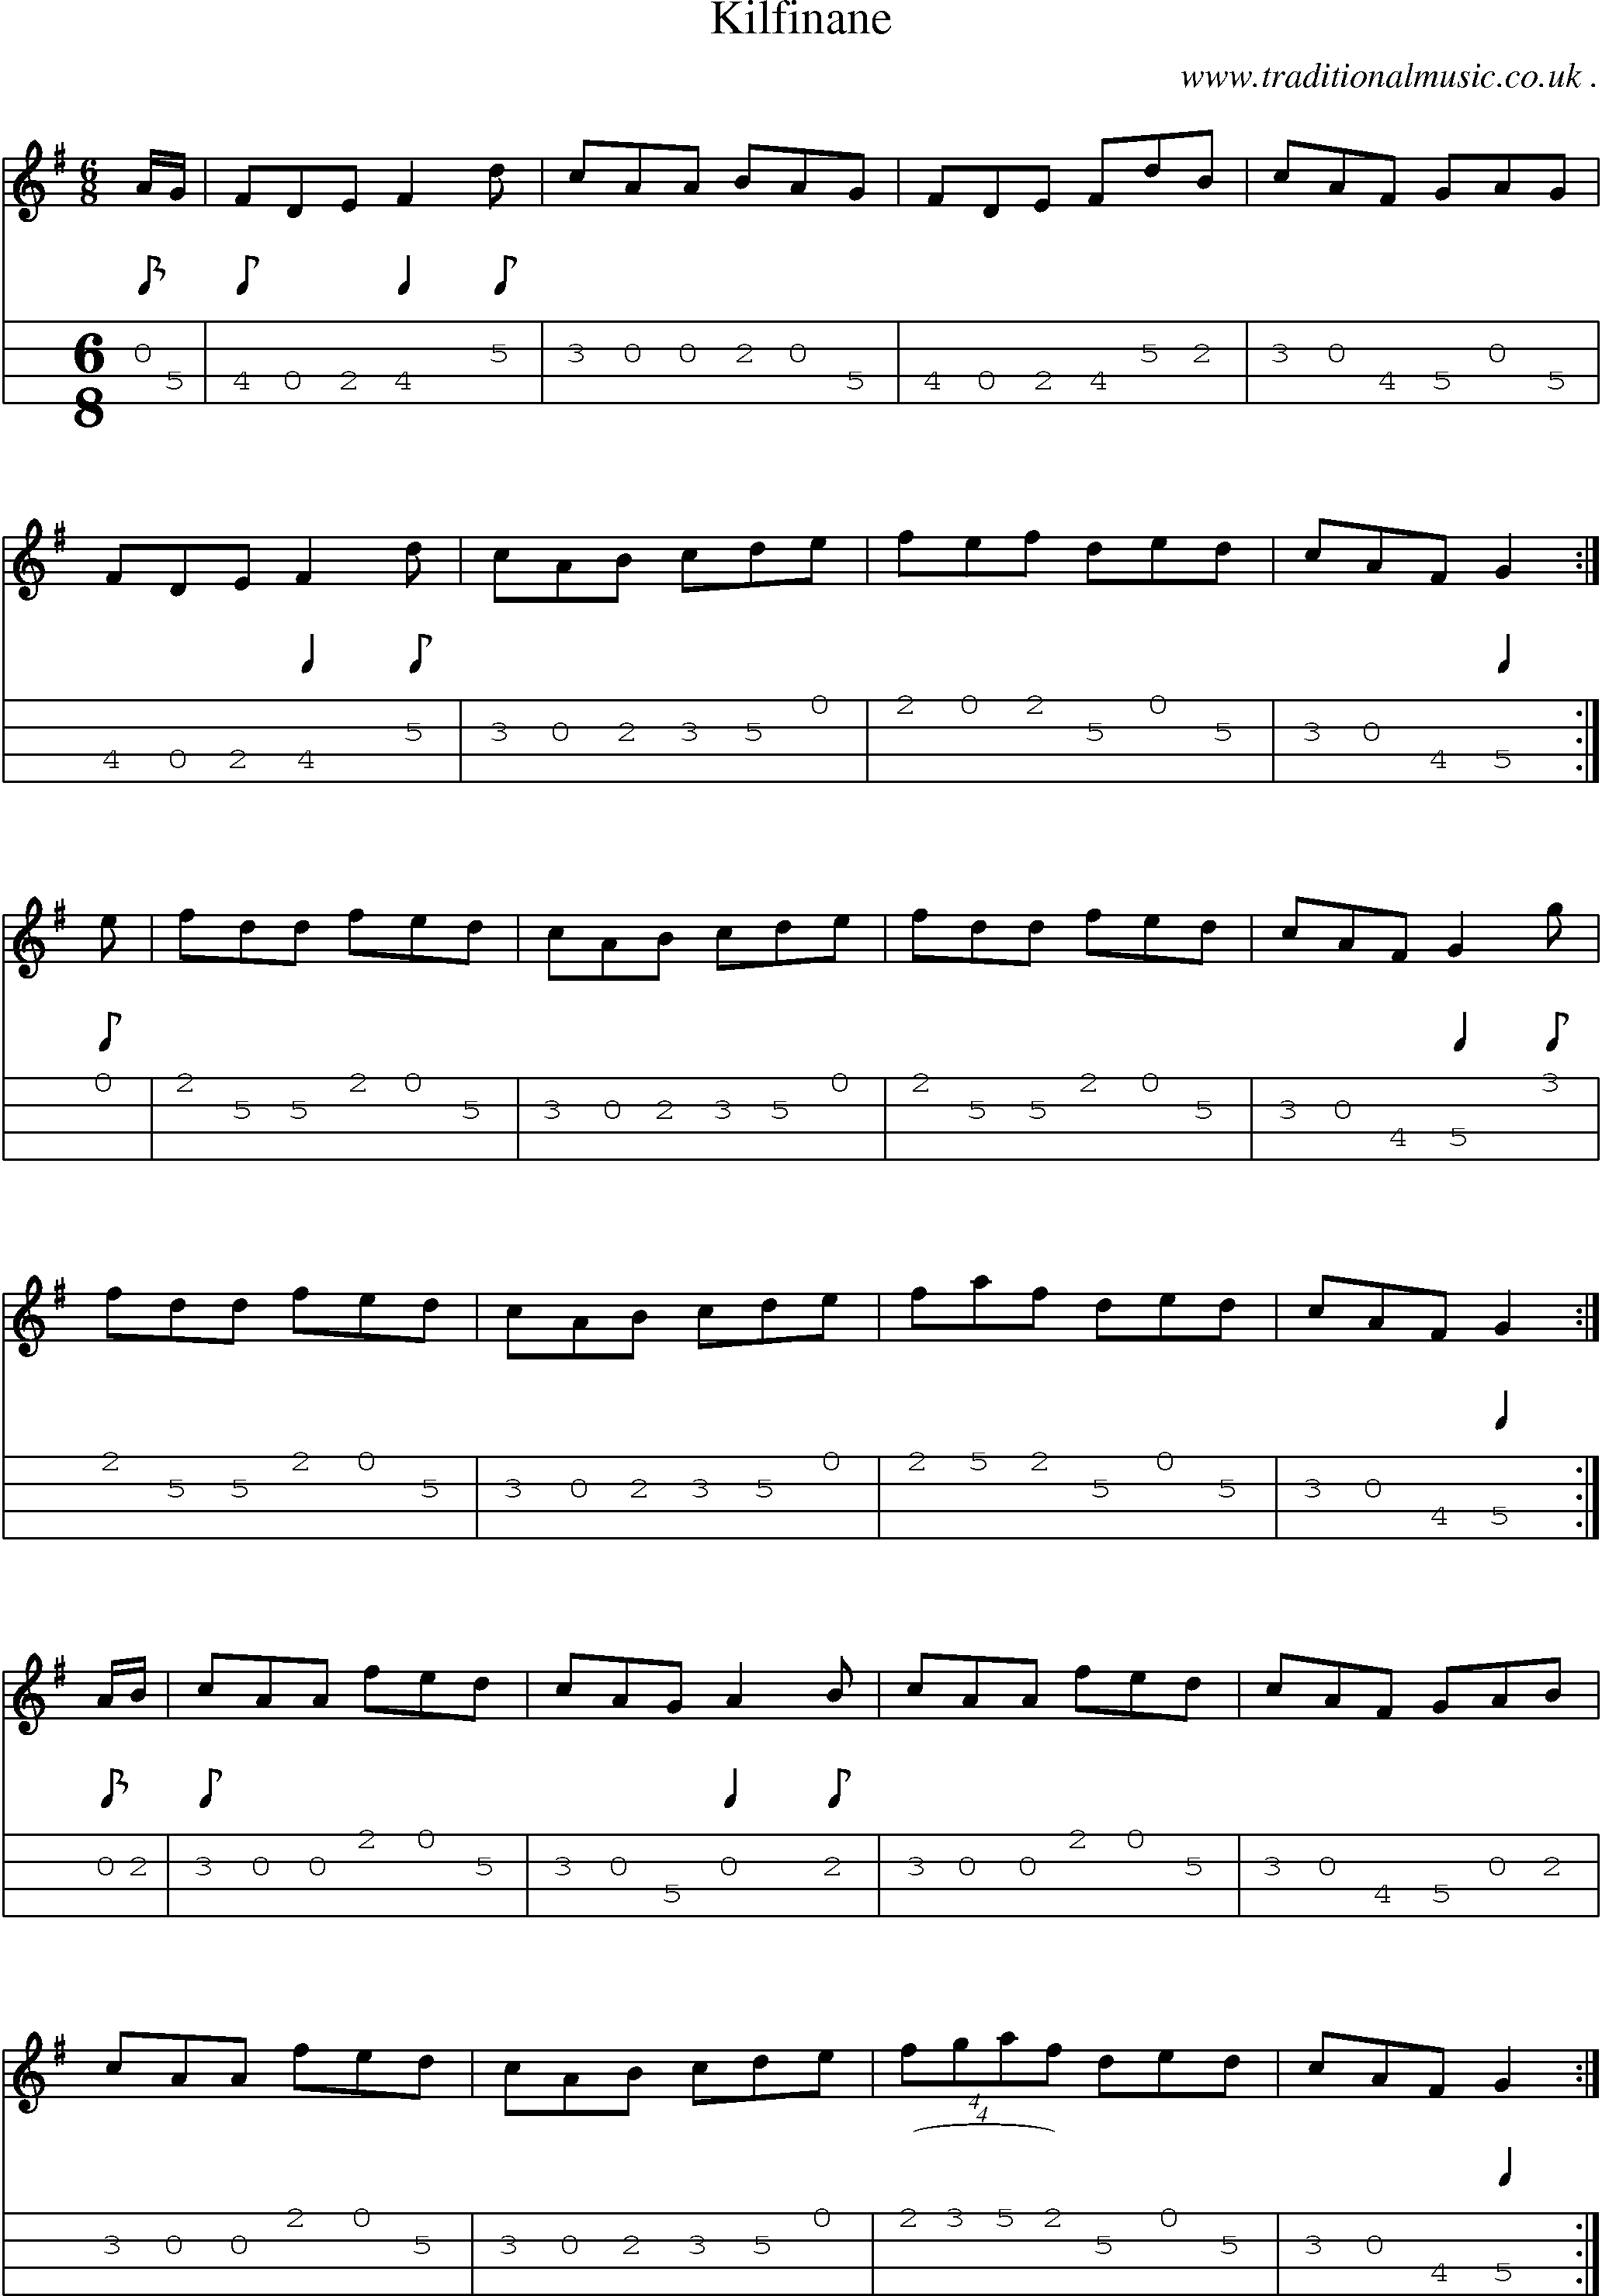 Sheet-Music and Mandolin Tabs for Kilfinane